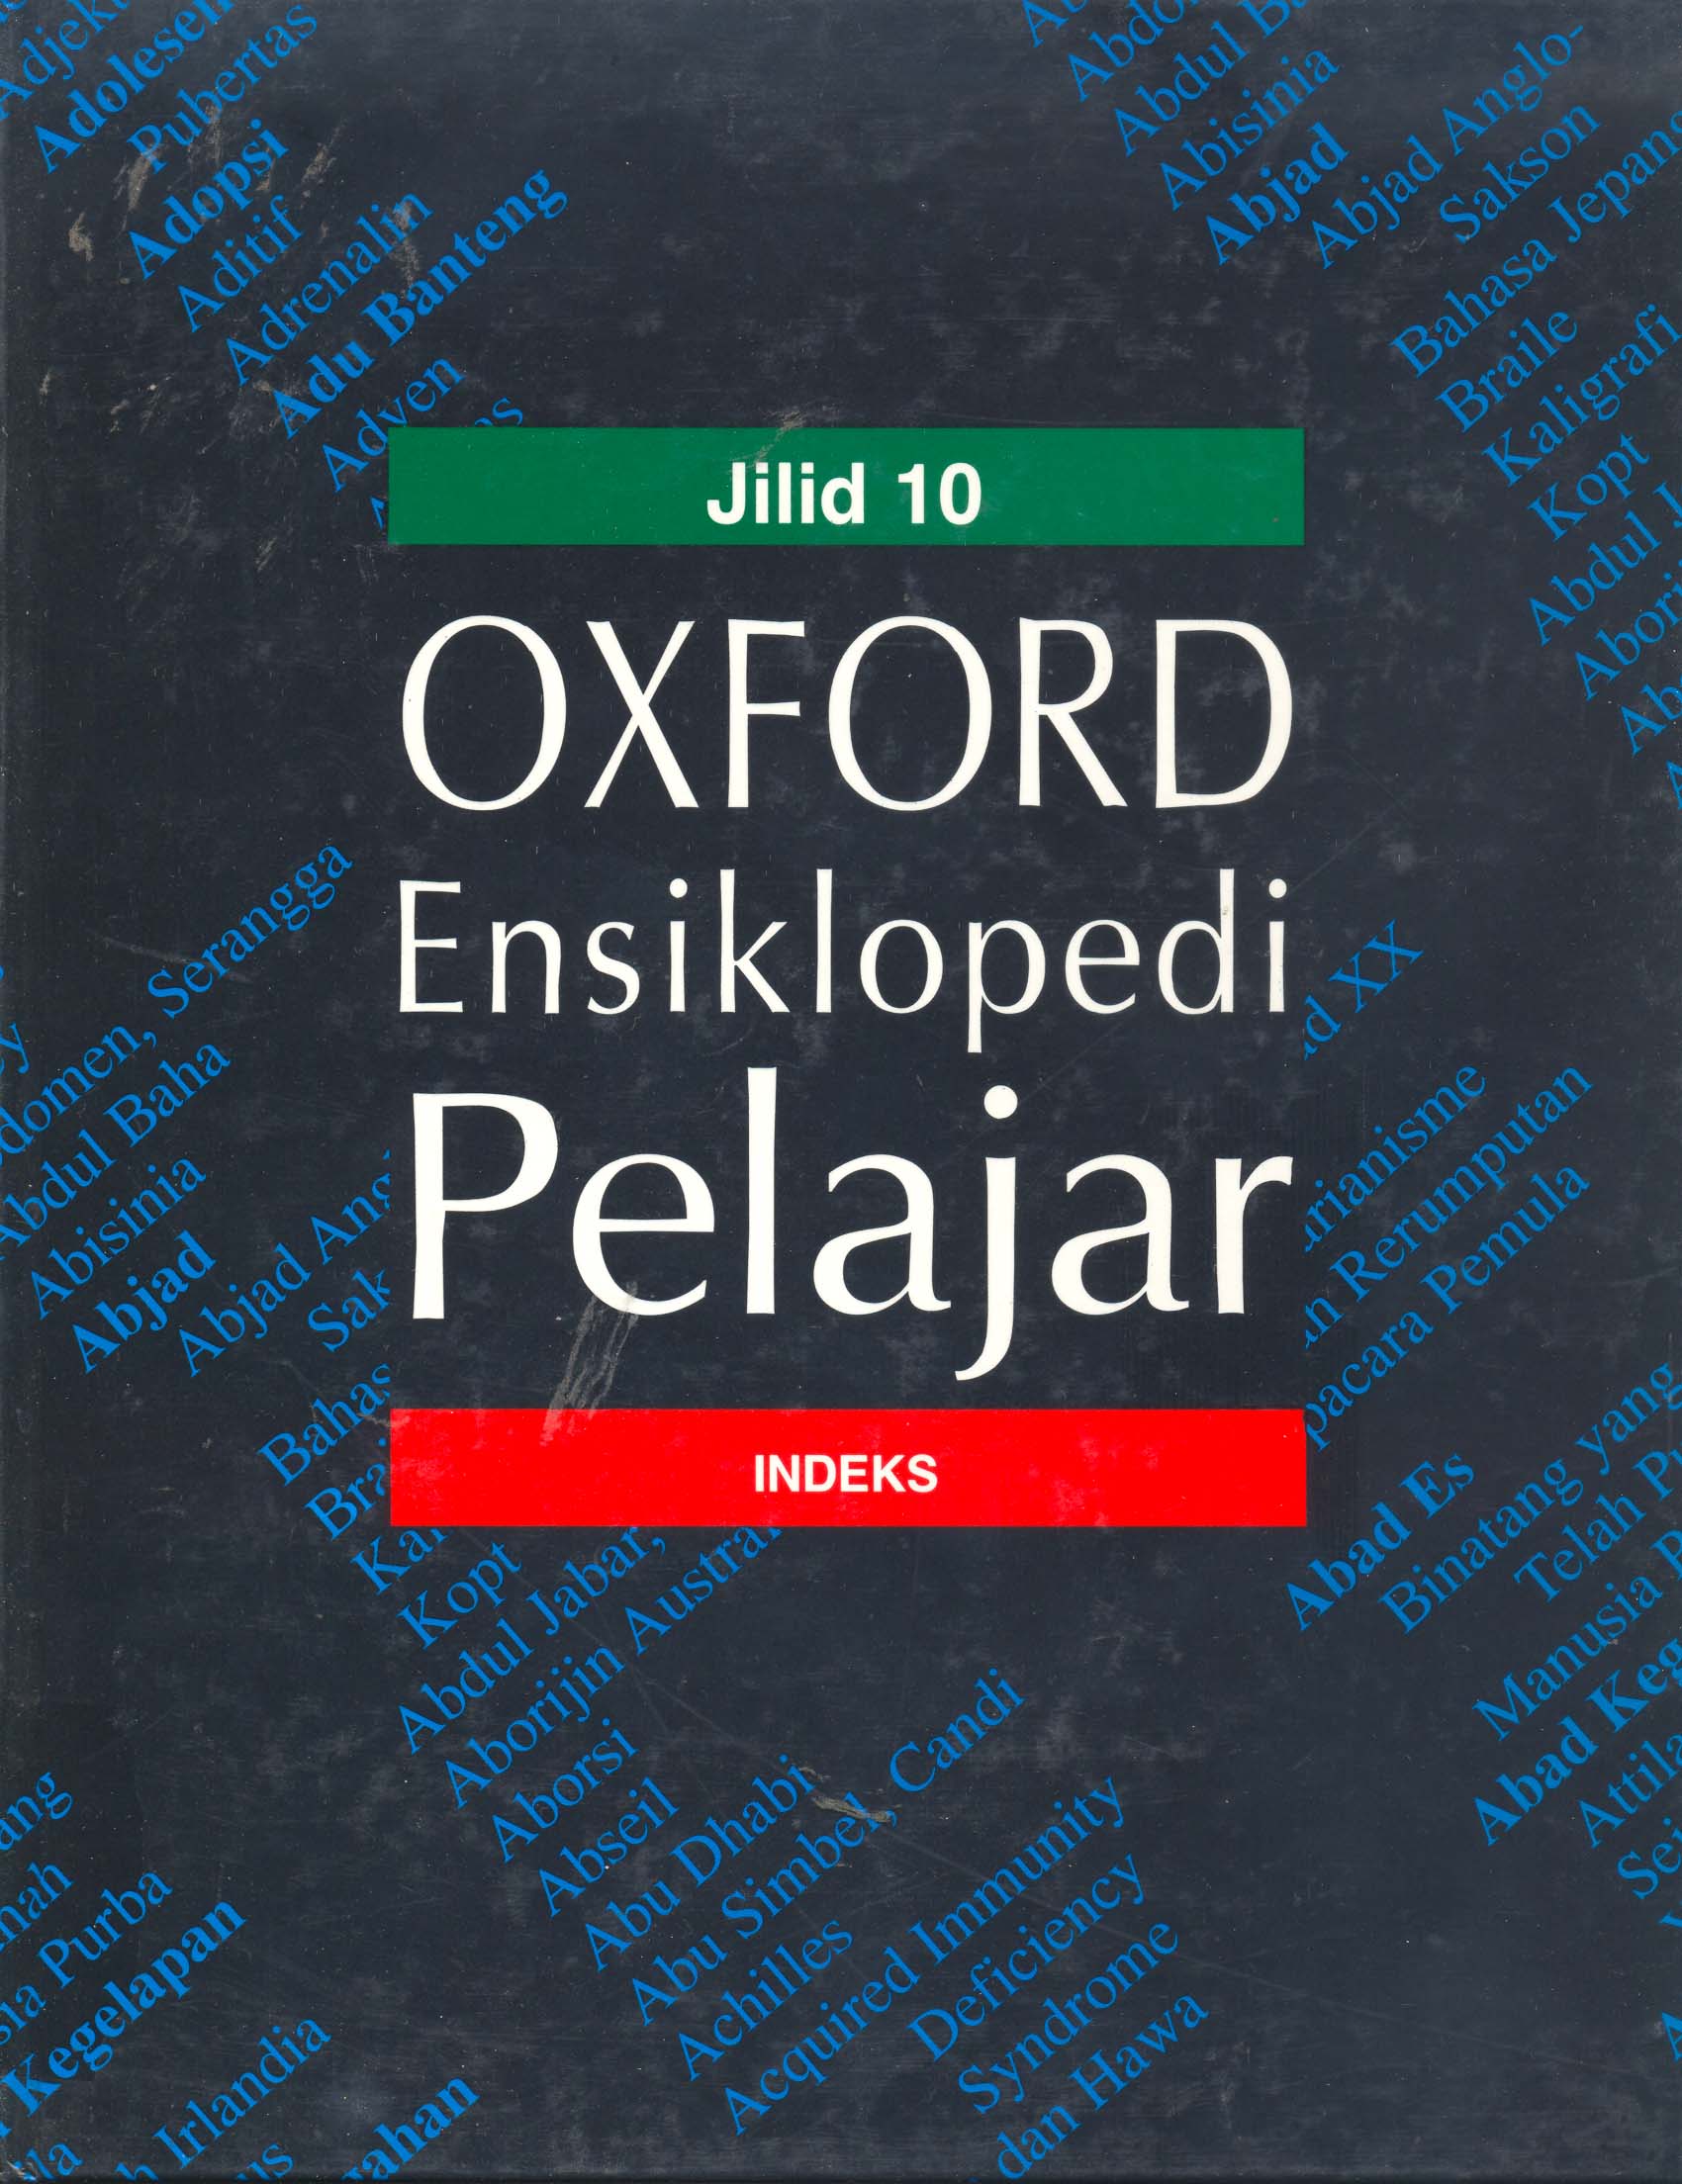 Oxford ensiklopedi pelajar :  Jilid 10 indeks